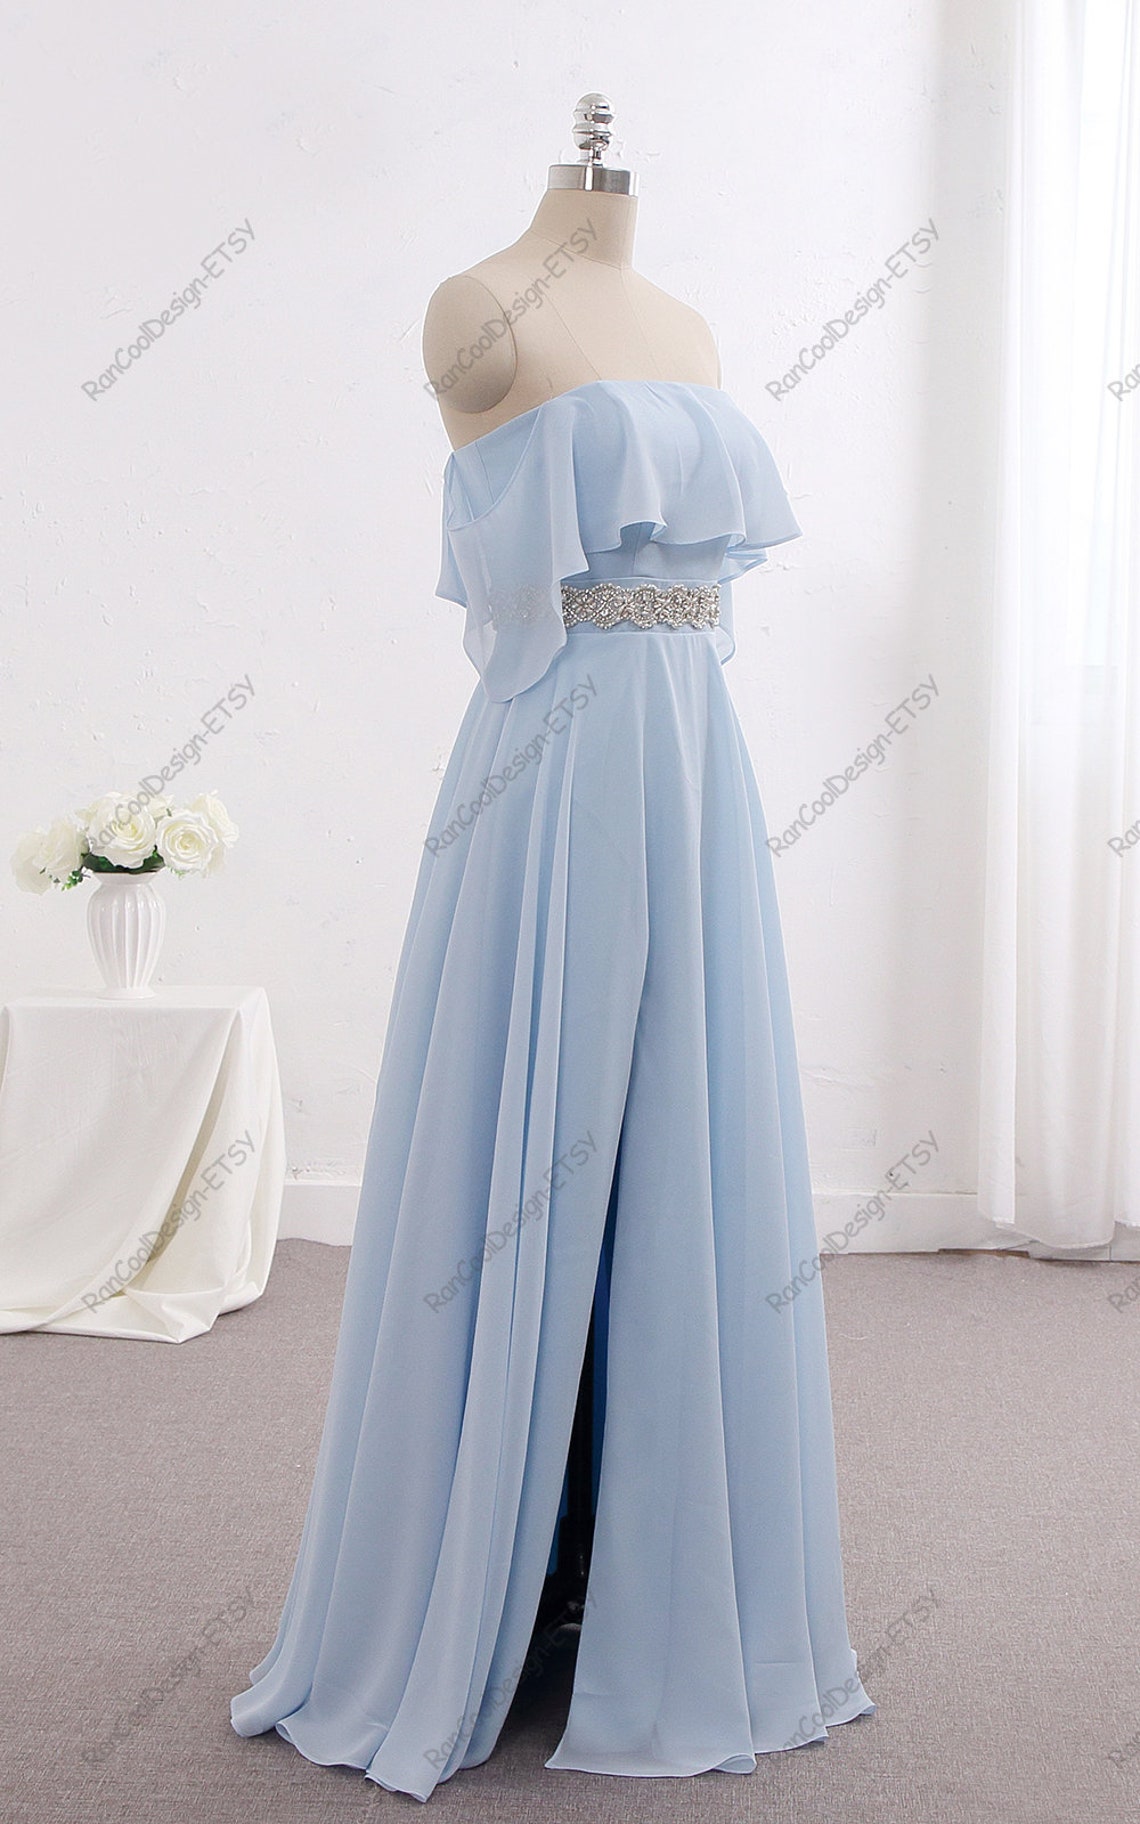 Sky Blue Chiffon Prom Dress Slit Skirt Wedding Dress Women | Etsy